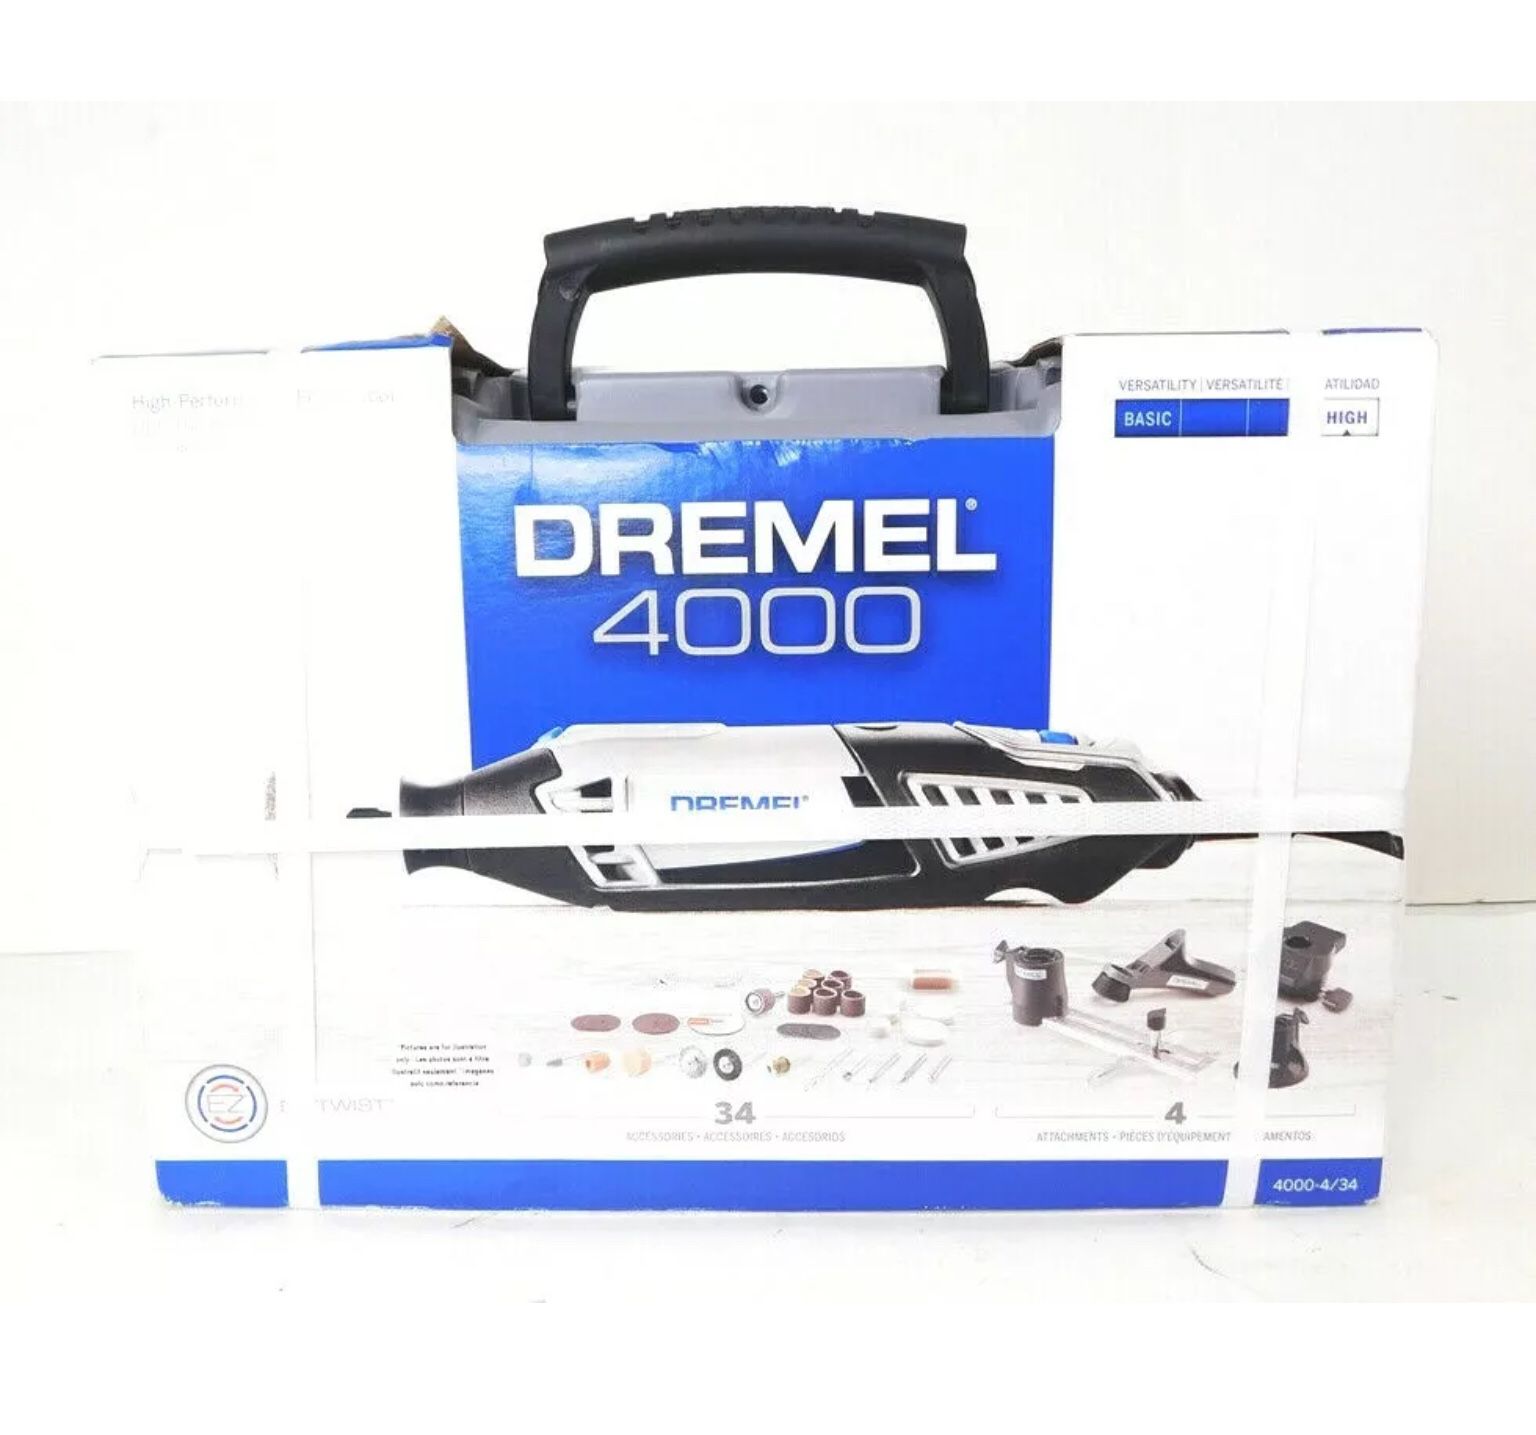 NEW Dremel 4000-4/34 High Performance Rotary Tool Kit